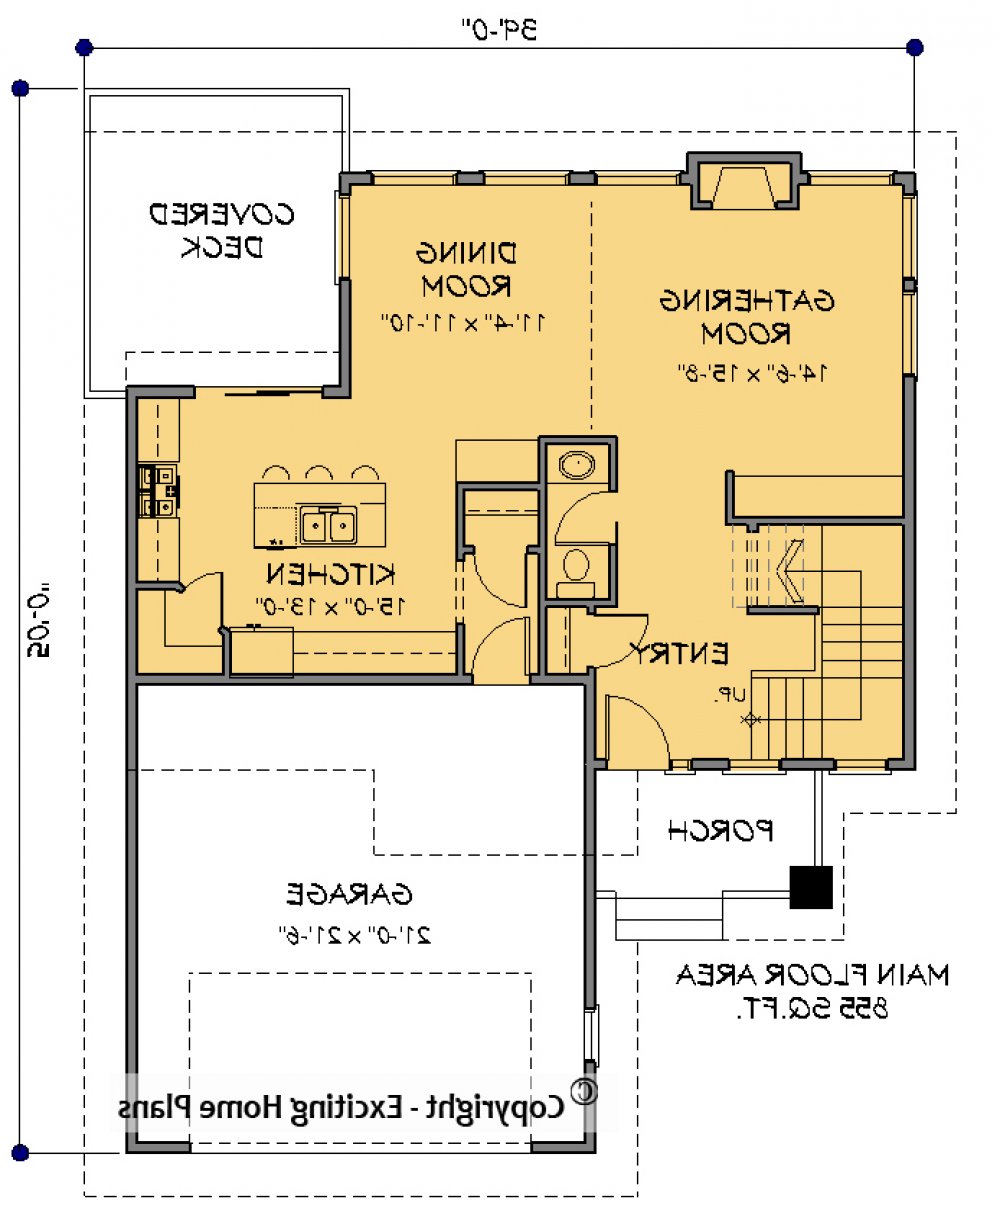 House Plan E1569-10 Main Floor Plan REVERSE